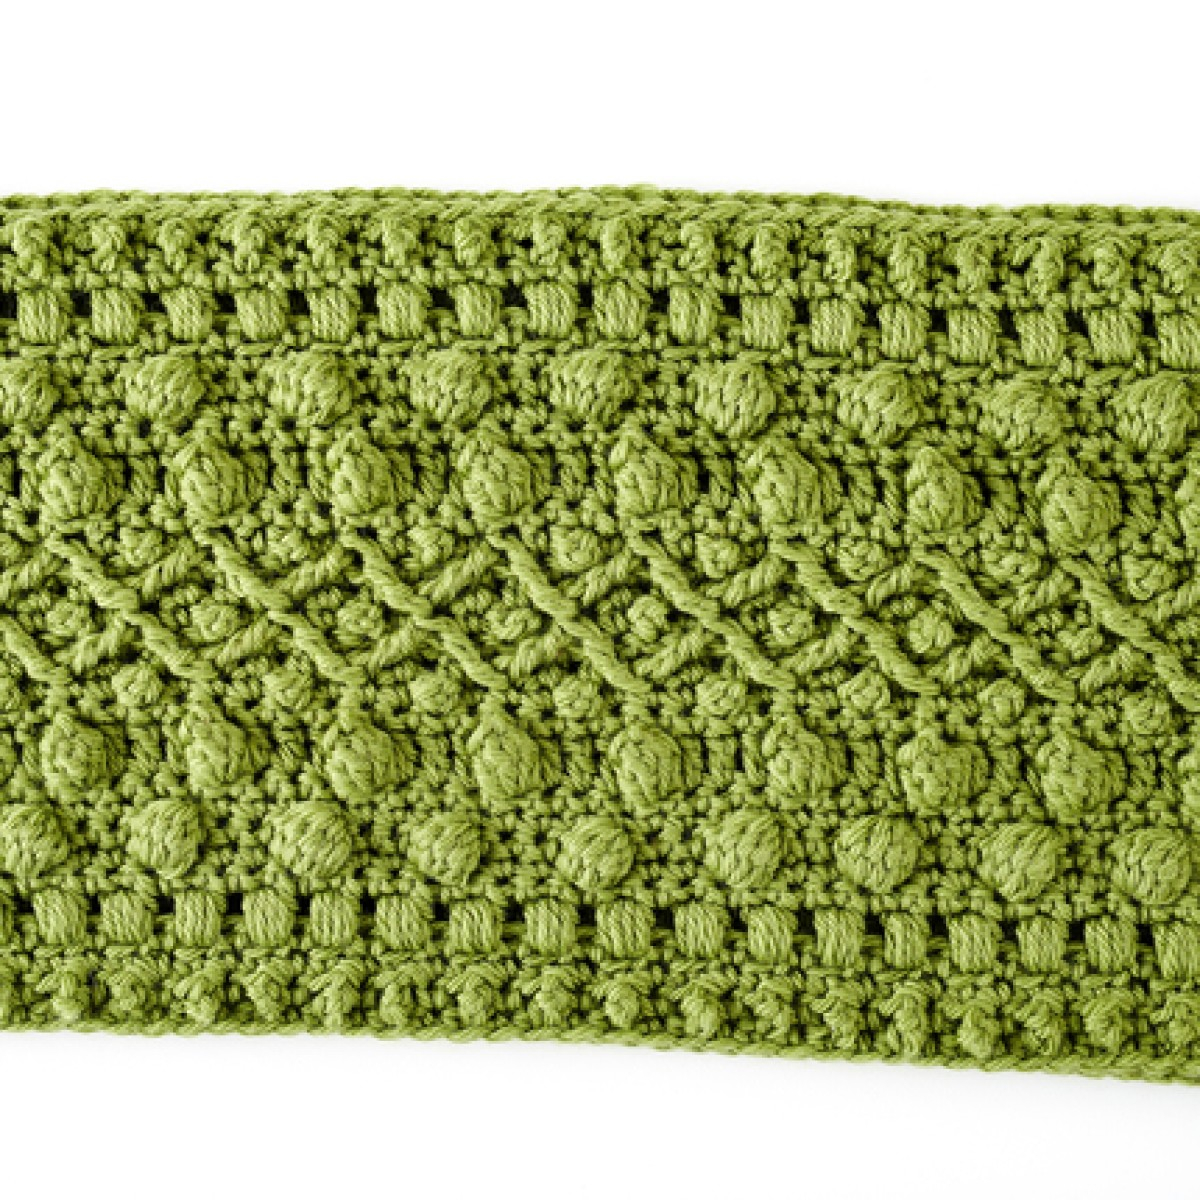 Crochet Stitches Patterns 7 Next Level Crochet Stitches Youll Love